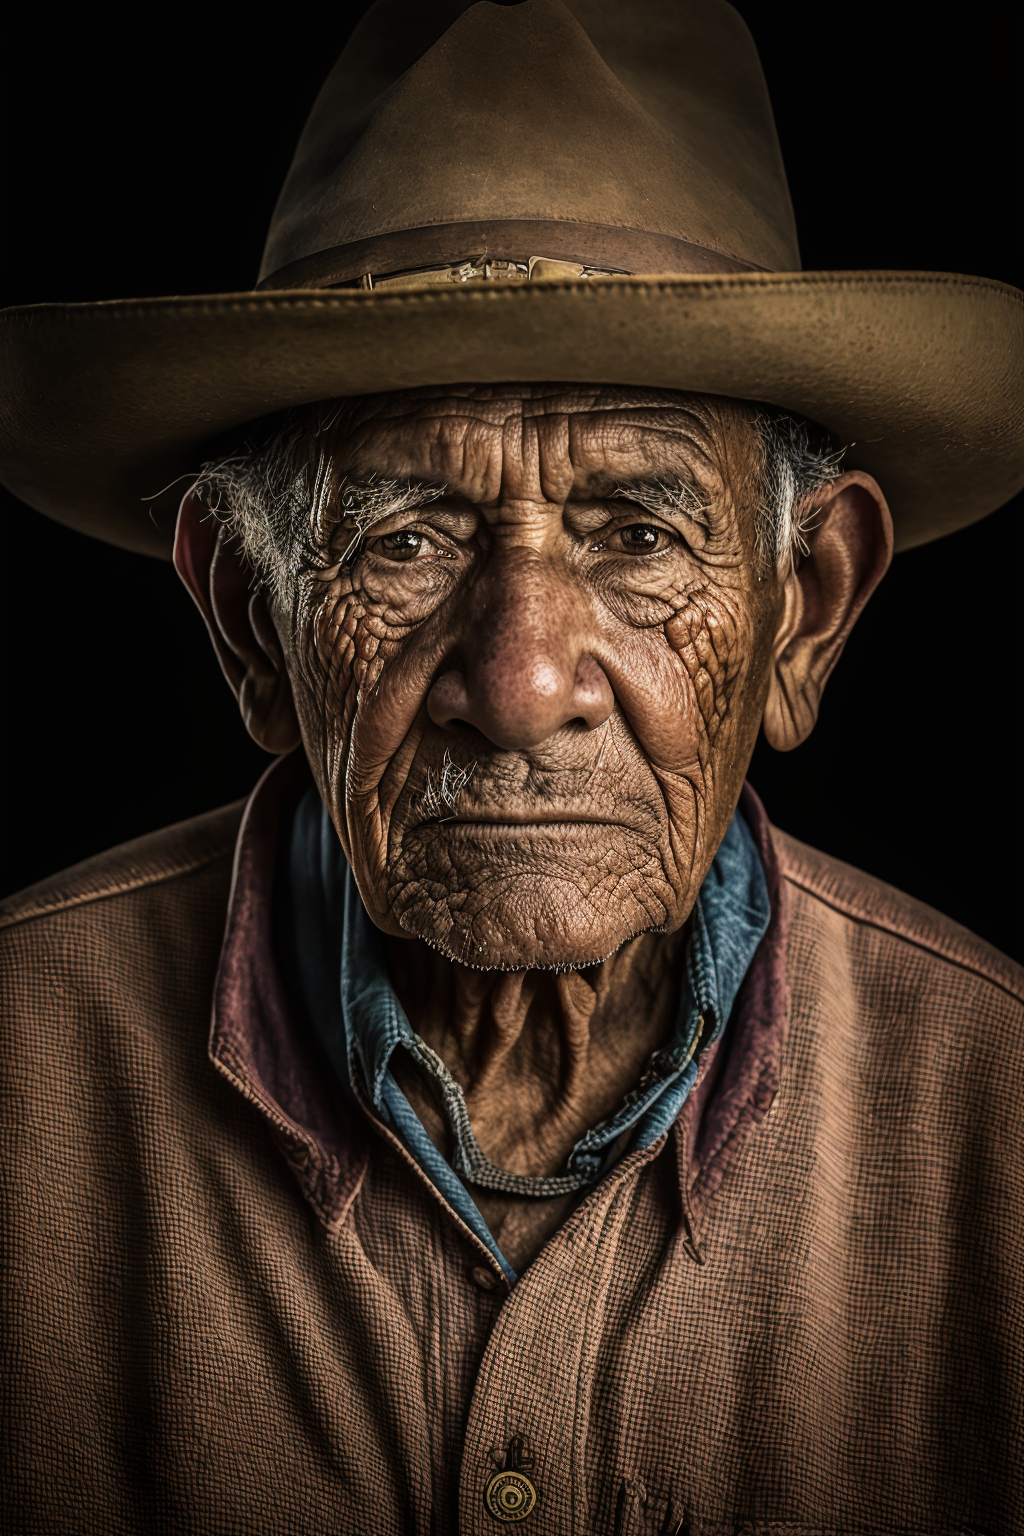 El_Topo_Loco_Upper-body_portrait_of_elderly_field_worker_in_Mex_a465f2f8-53be-4de0-b9a2-a1904a03abf3.png